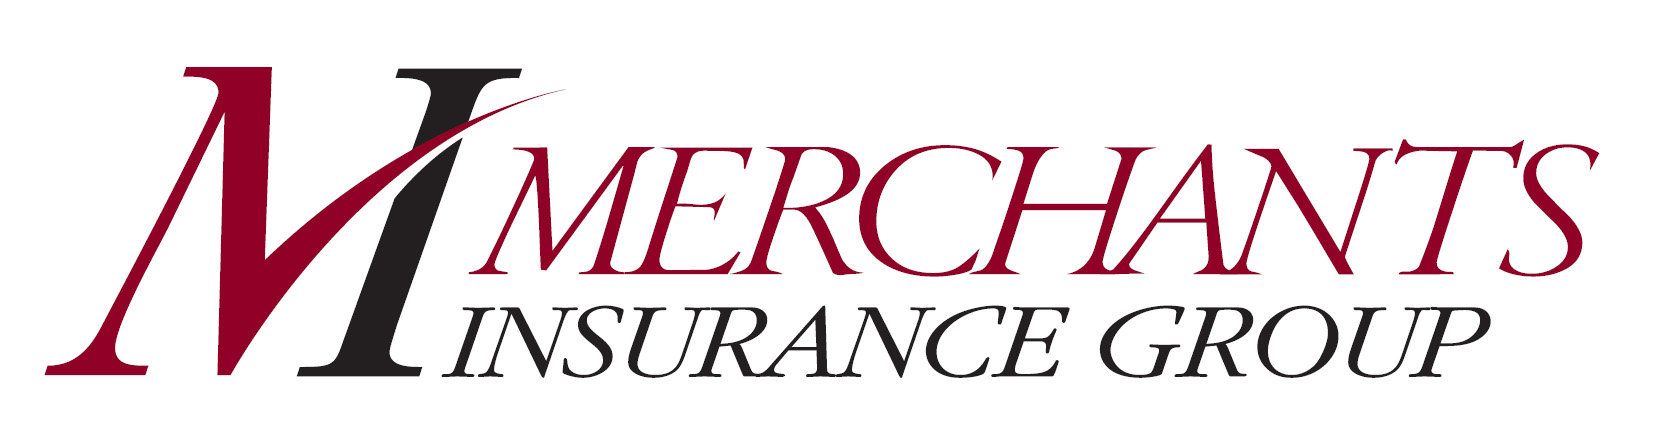 merchants_insurance_group.jpg